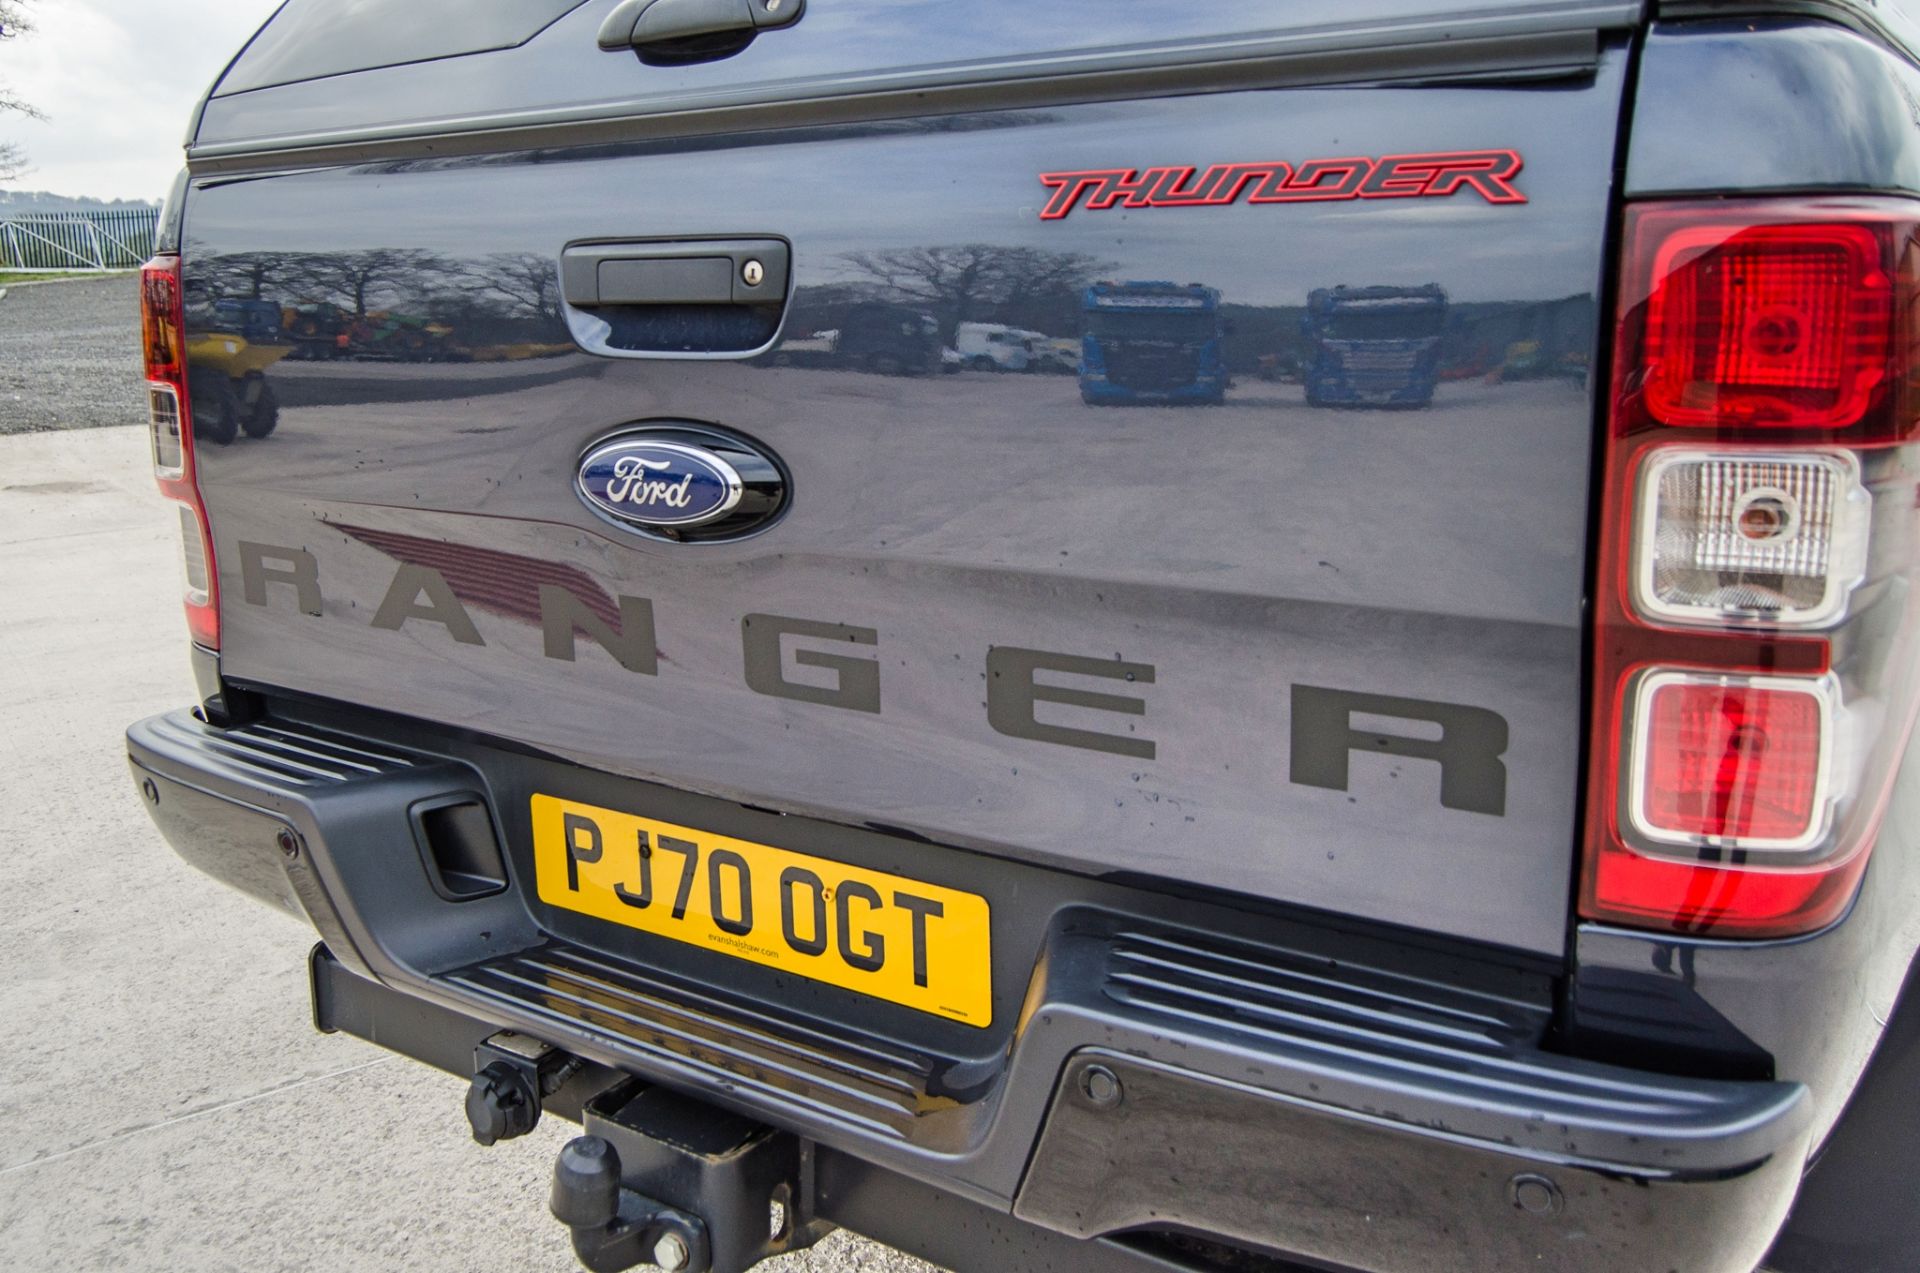 Ford Ranger Thunder 1996cc Ecoblue 4x4 automatic pick up Registration Number: PJ70 OGT Date of - Image 13 of 36